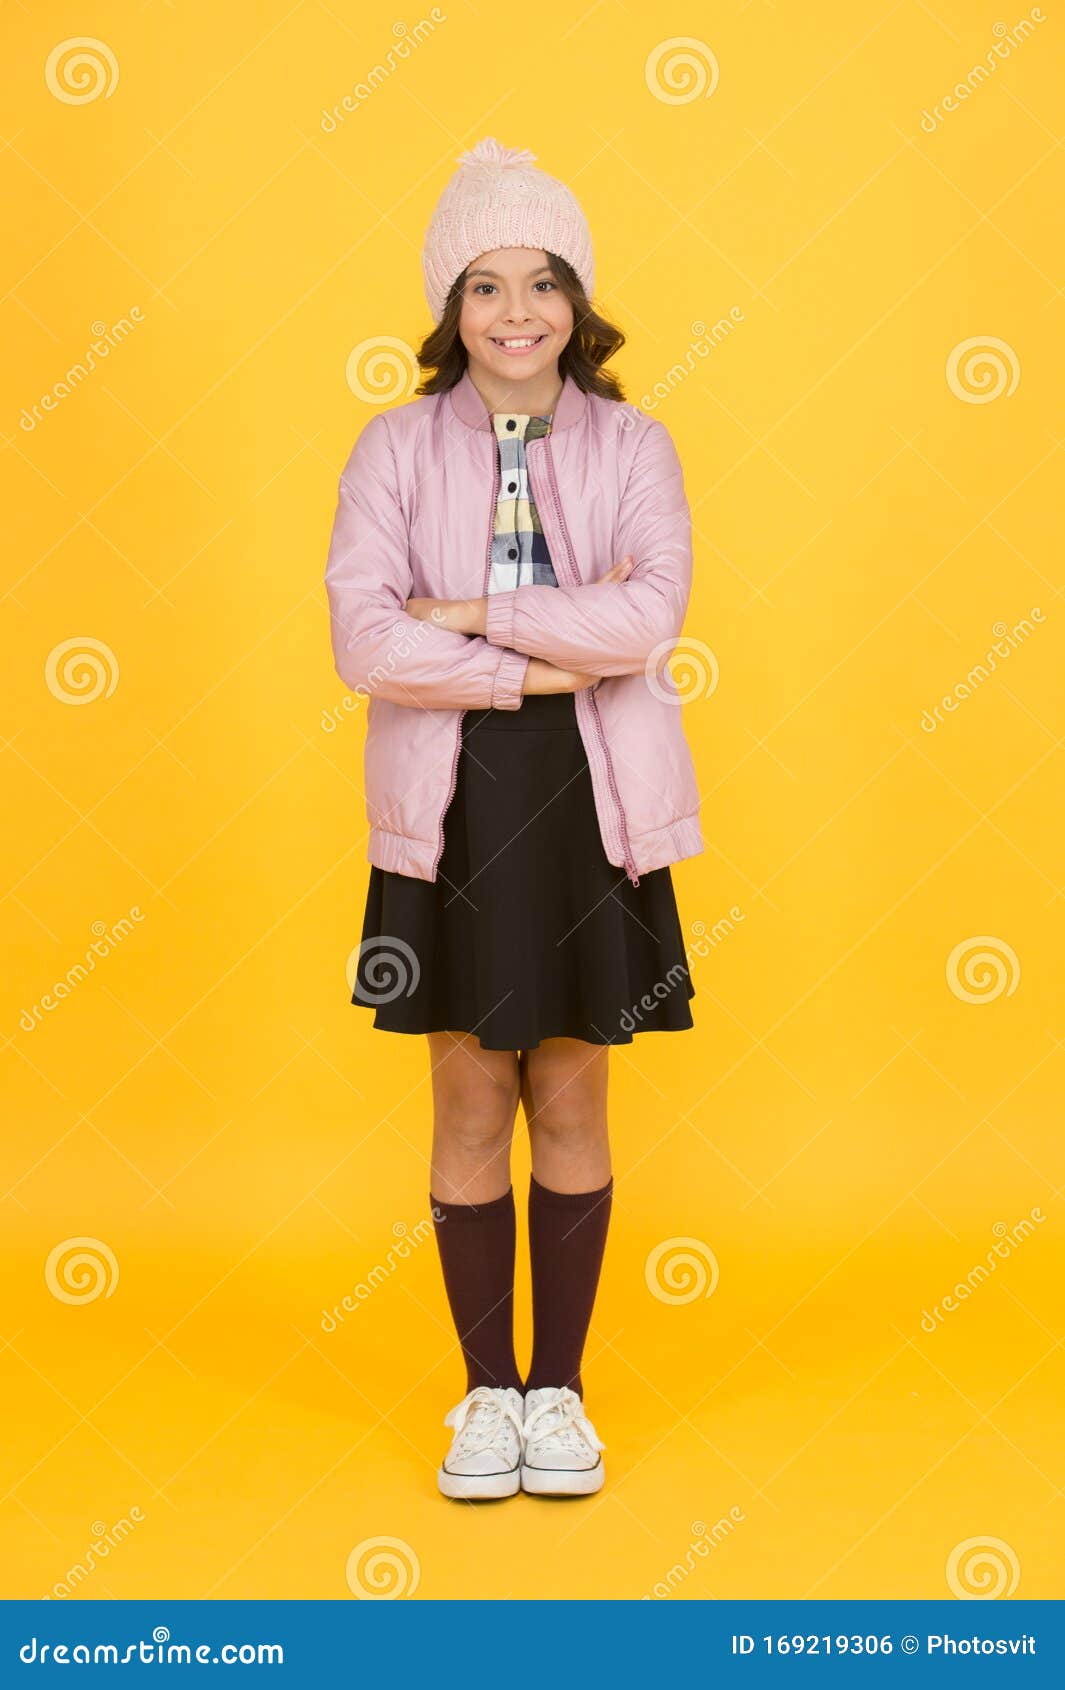 Little school girl clothes